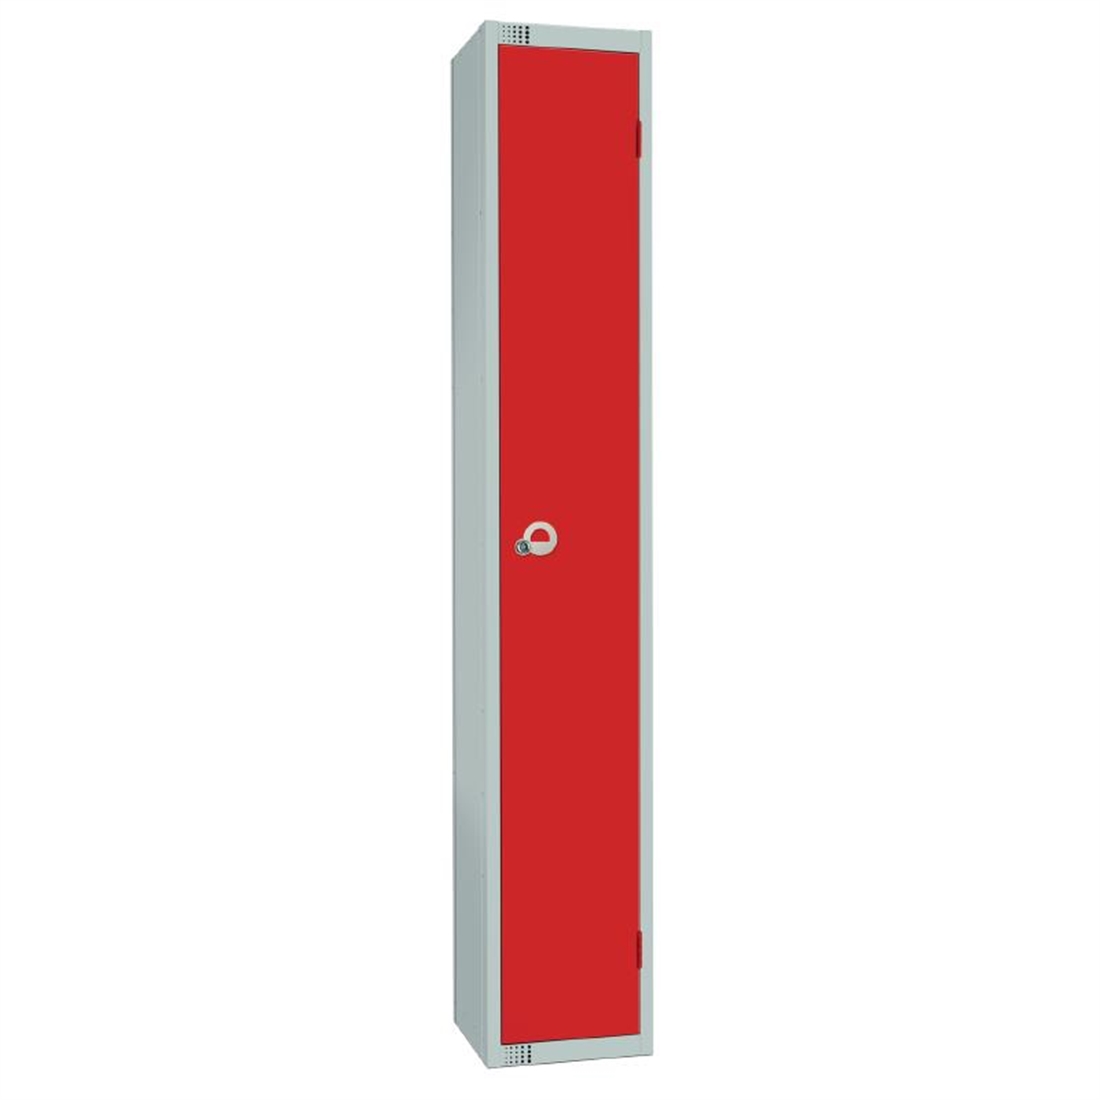 Elite Single Door Manual Combination Locker Locker Red with Sloping Top